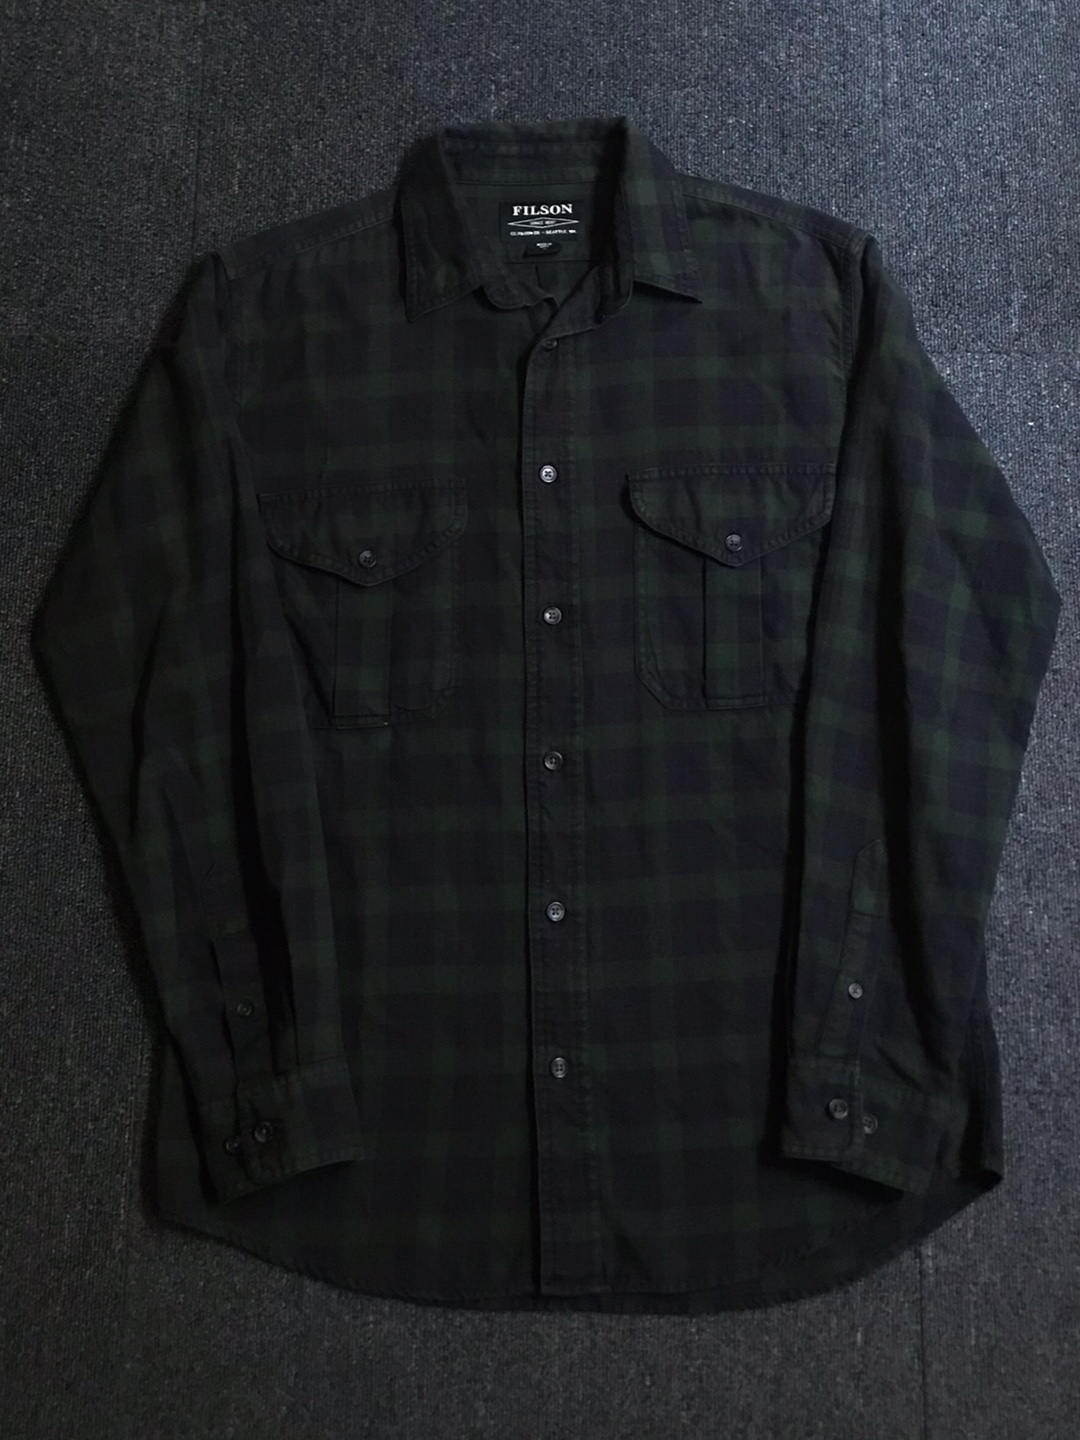 filson cotton plaid work shirt (S size, ~103 추천)